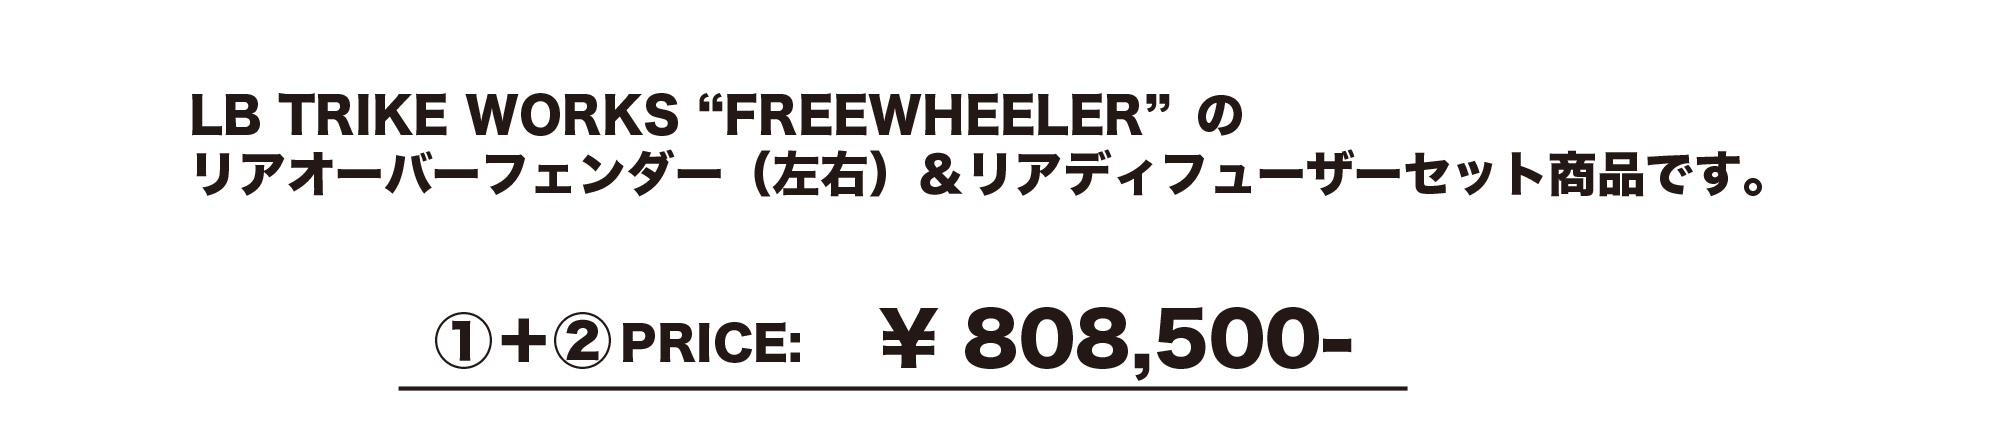 LB TRIKE WORKS "FREEWHEELER" のリアオーバーフェンダー（左右）＆ リアディフューザーセット商品です。
①+② PRICE: ￥808,500